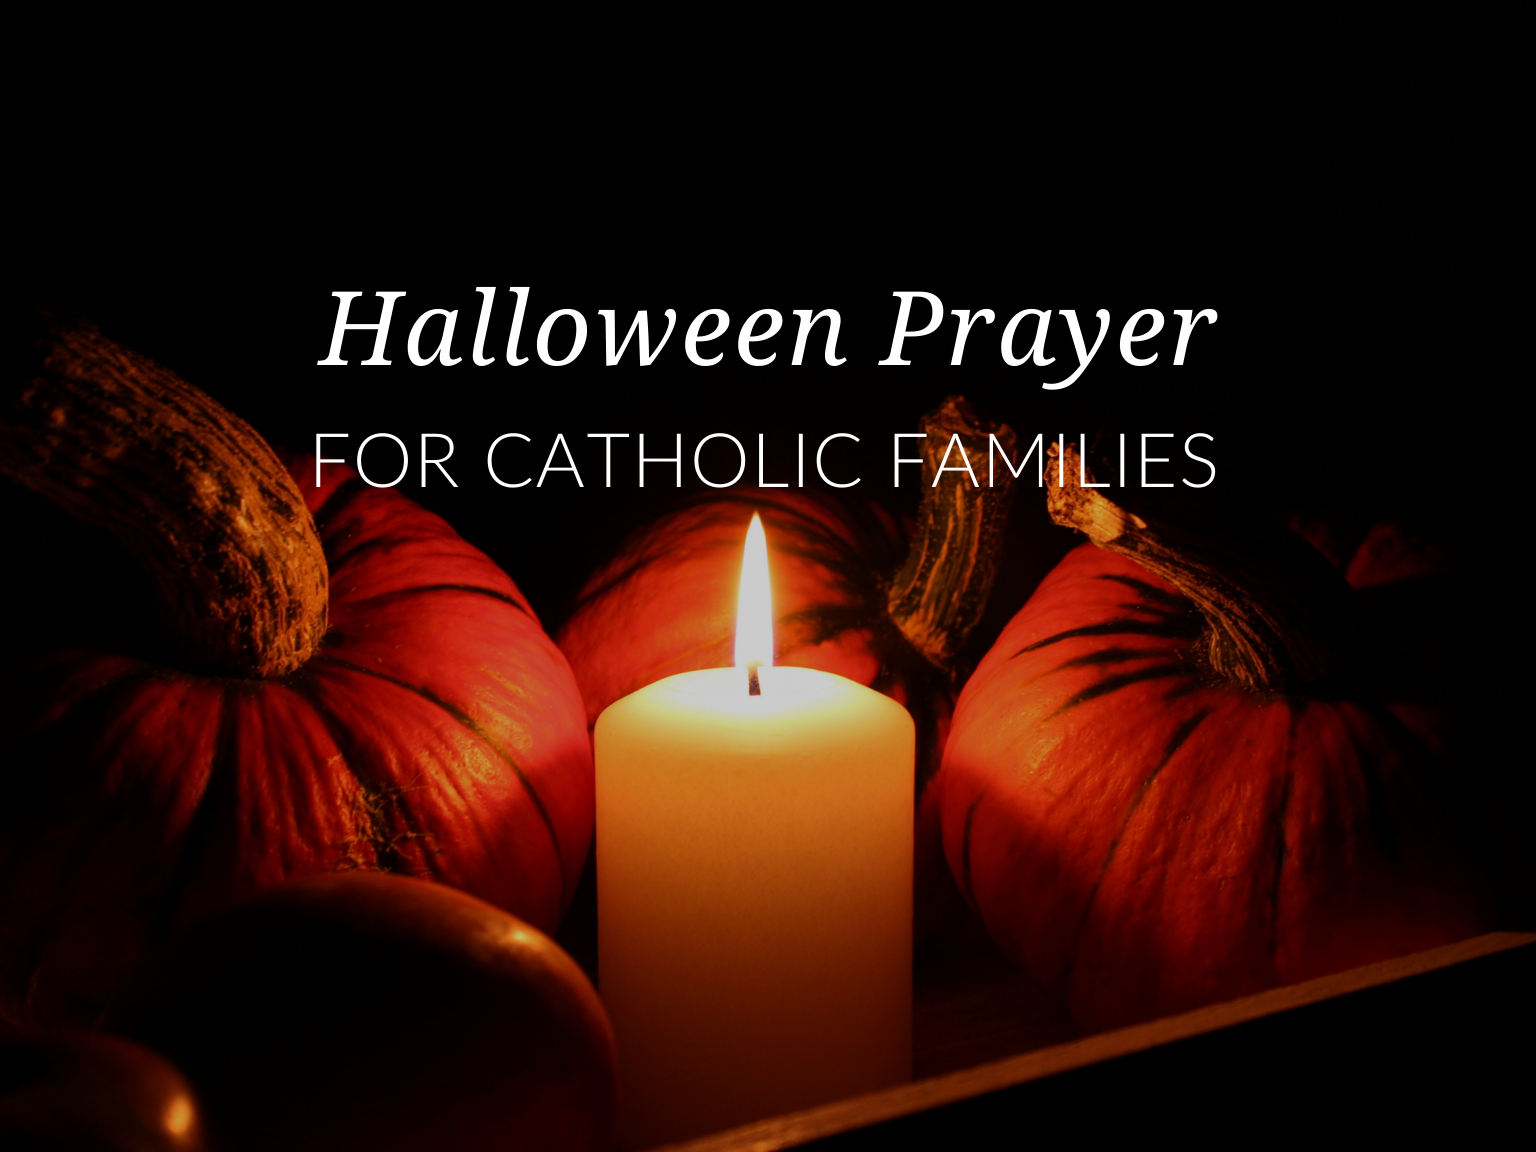 A Halloween Prayer for Families